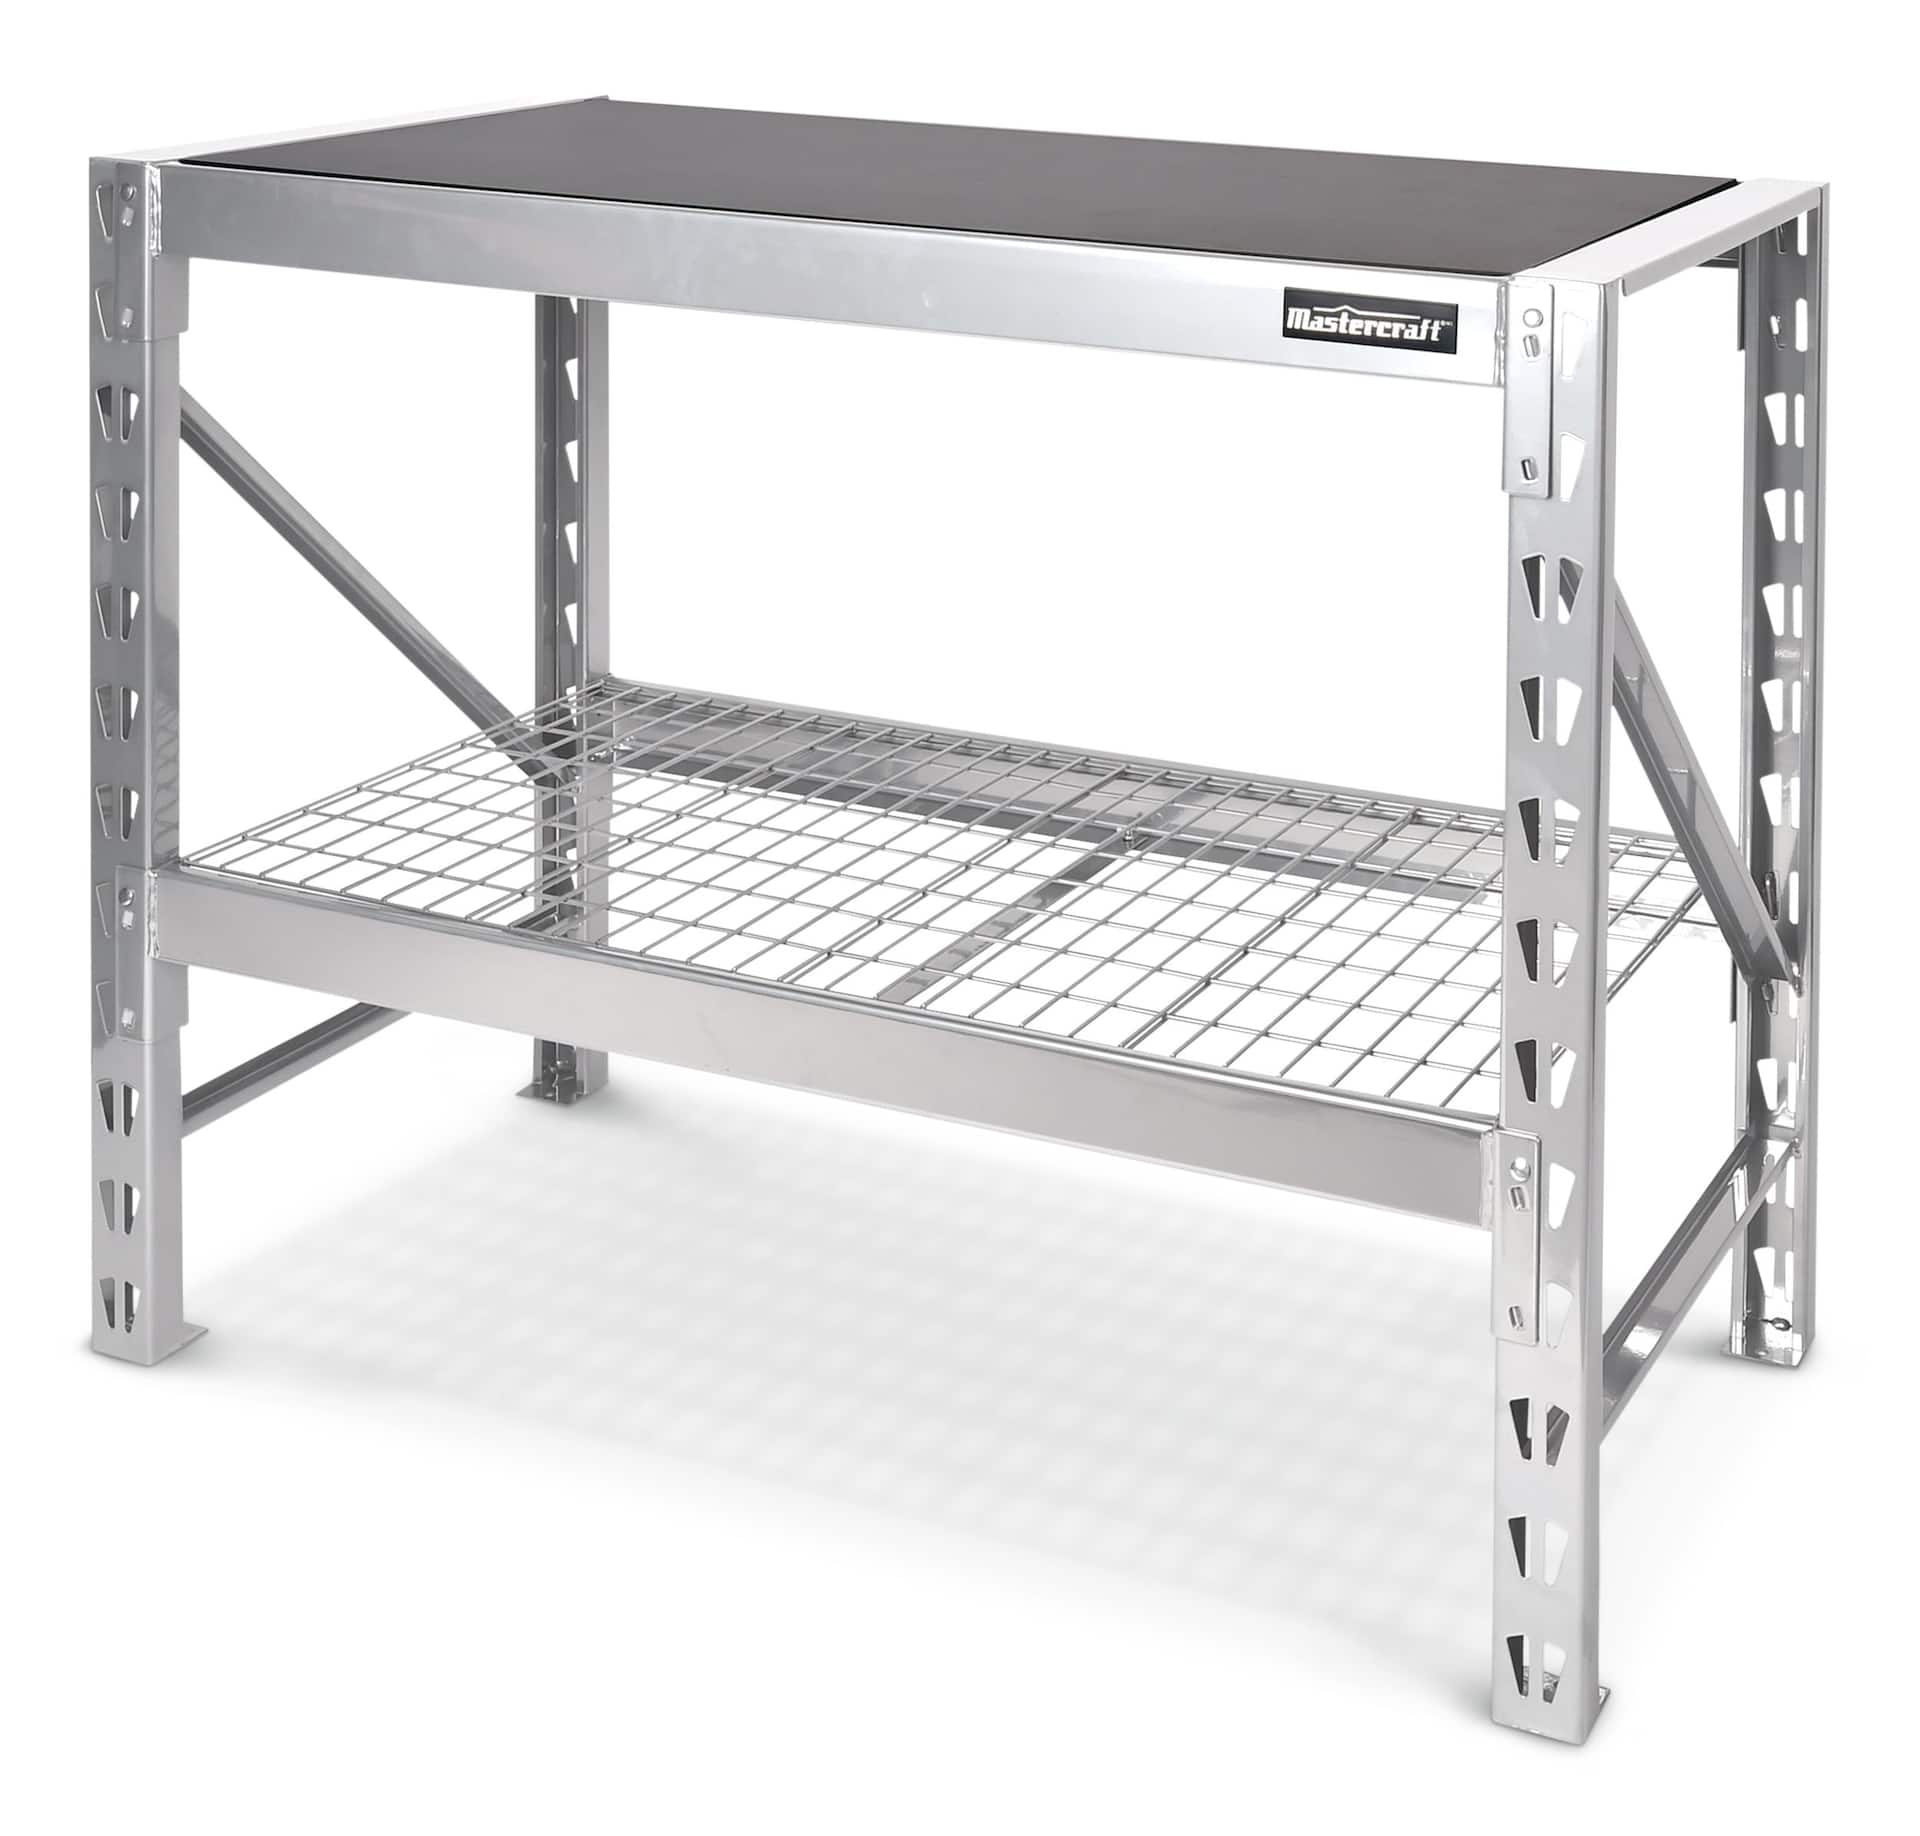 Mastercraft Steel Folding Workbench/Work Table w/ Adjustable Shelves,  48x23x36-in Canadian Tire